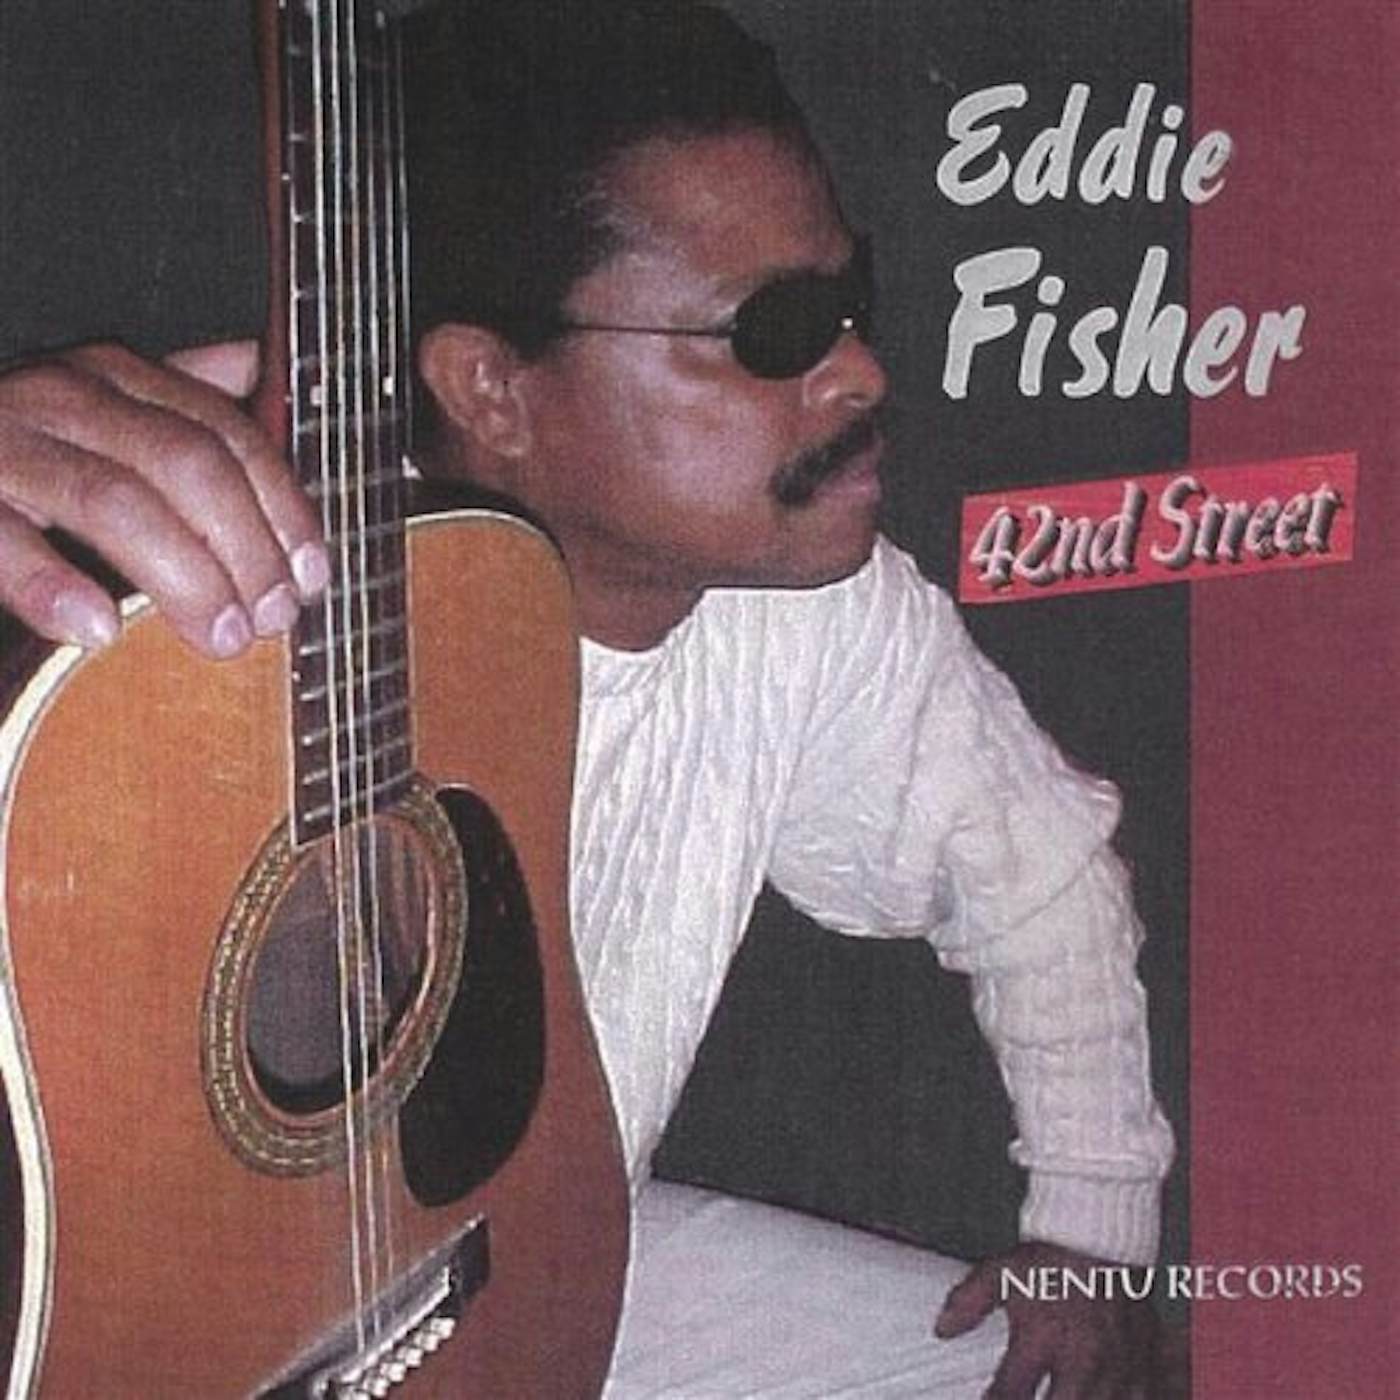 Eddie Fisher 42ND STREET CD